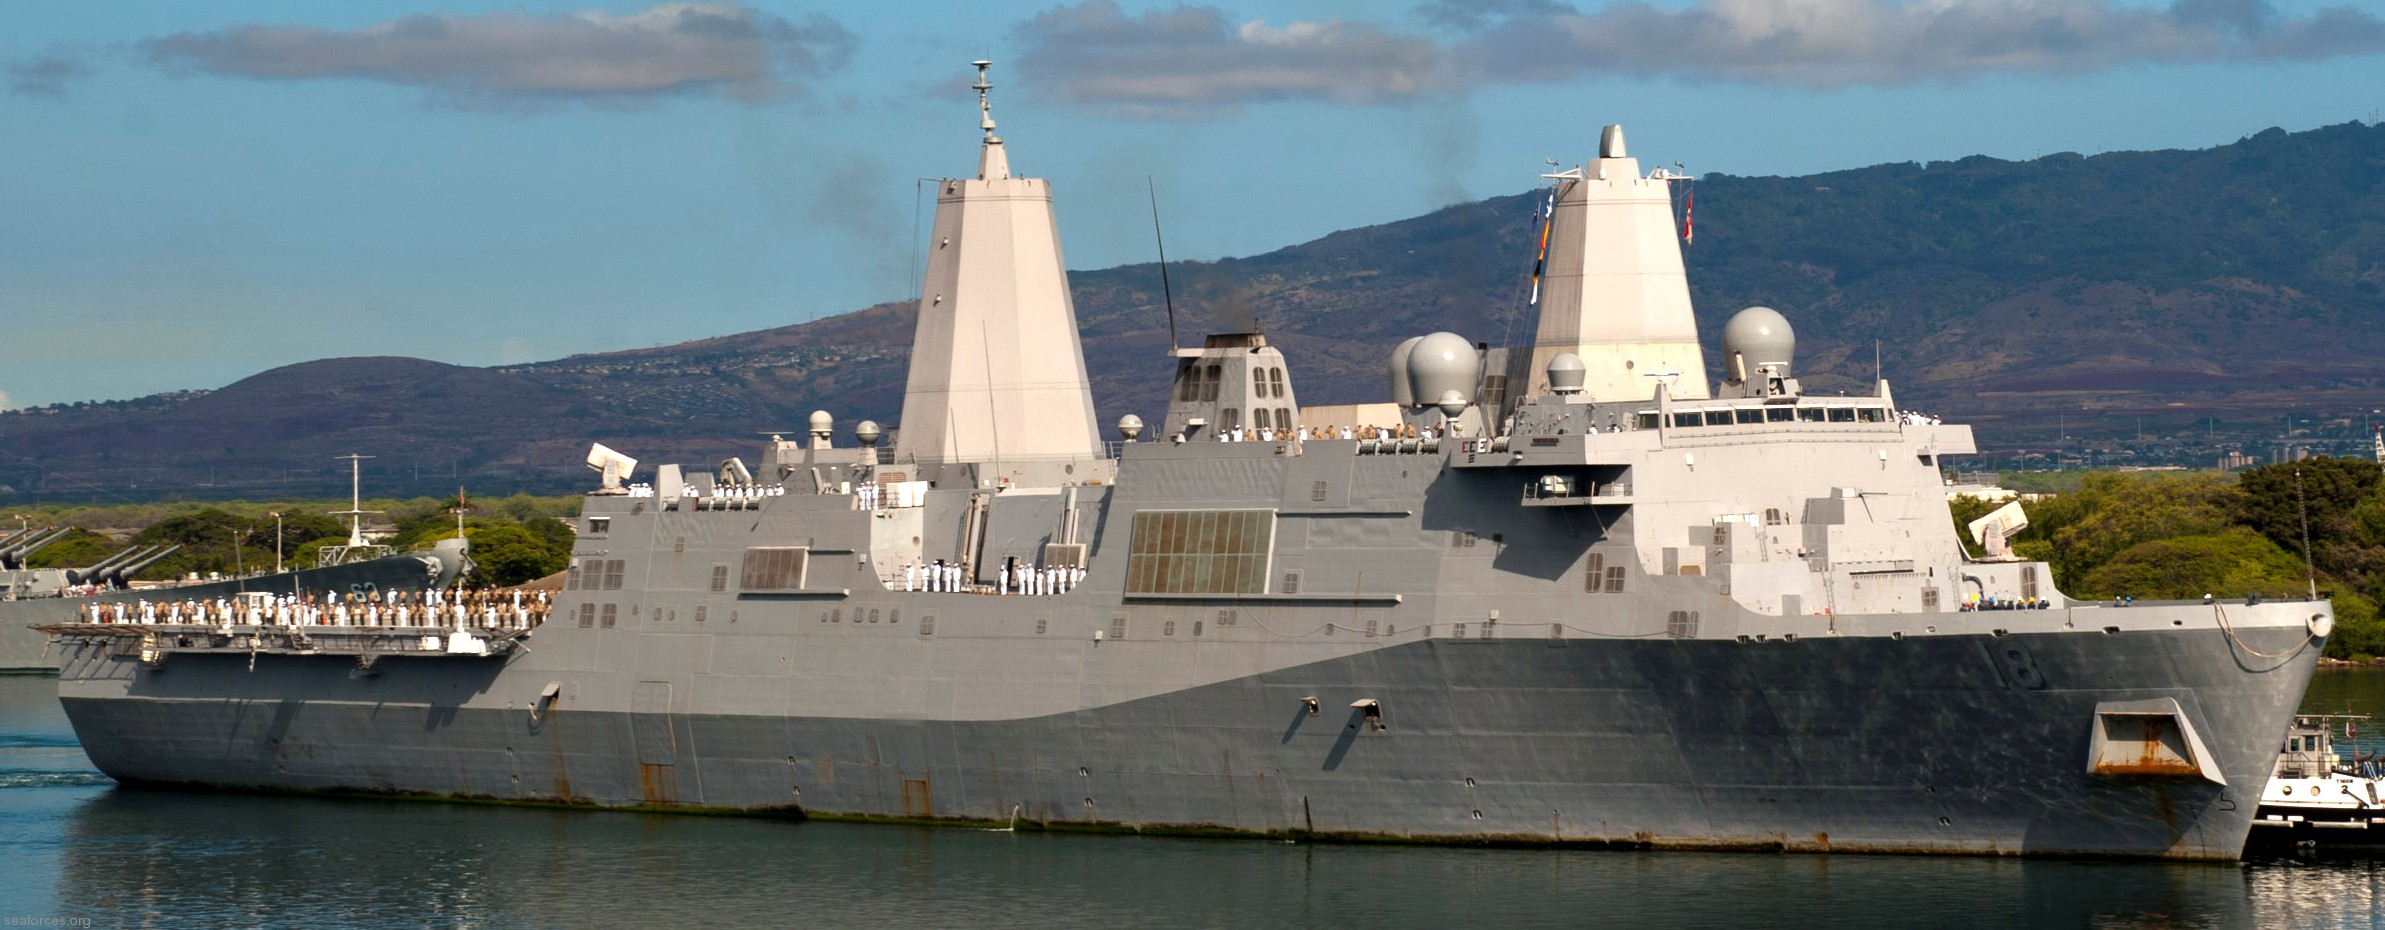 lpd-18 uss new orleans san antonio class amphibious transport dock landing ship 22 pearl harbor hawaii